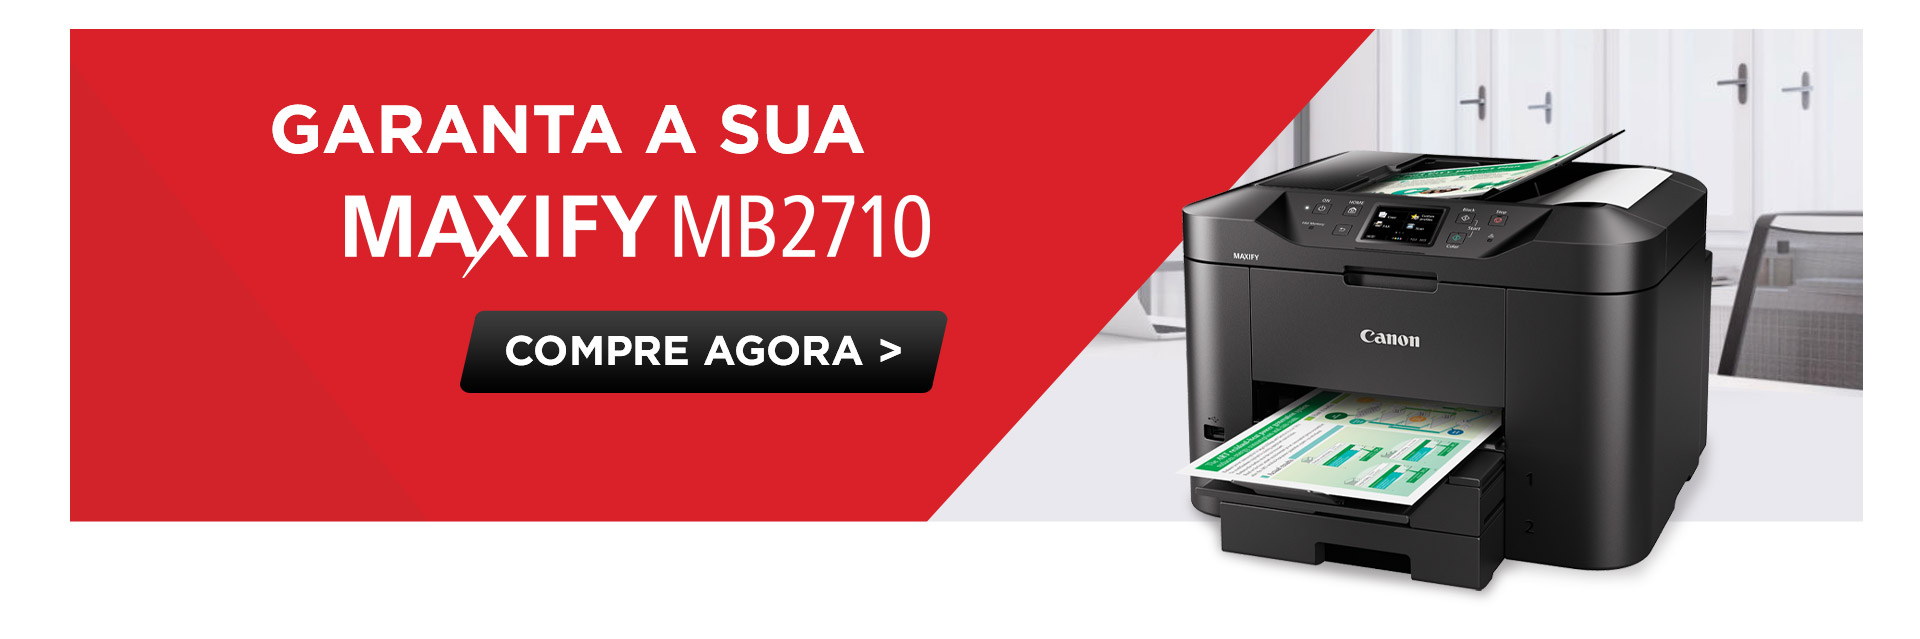 Impressora Multifuncional MAXIFY MB2710